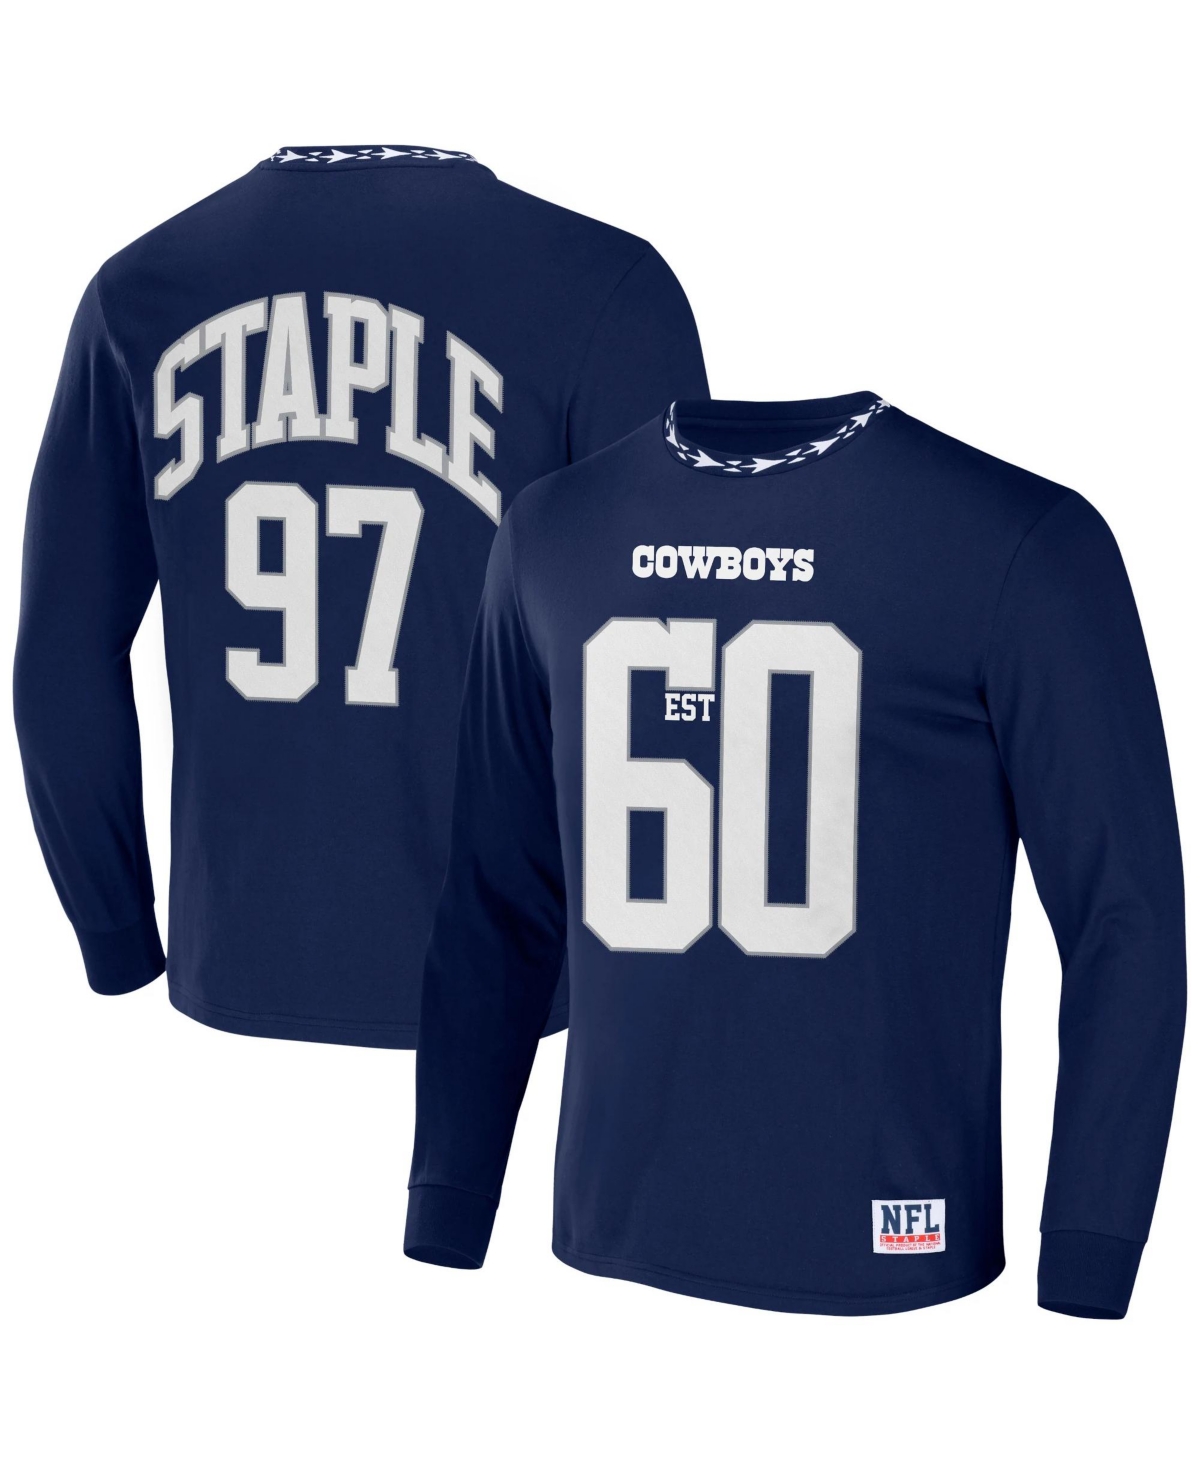 Shop Nfl Properties Men's Nfl X Staple Navy Dallas Cowboys Core Long Sleeve Jersey Style T-shirt